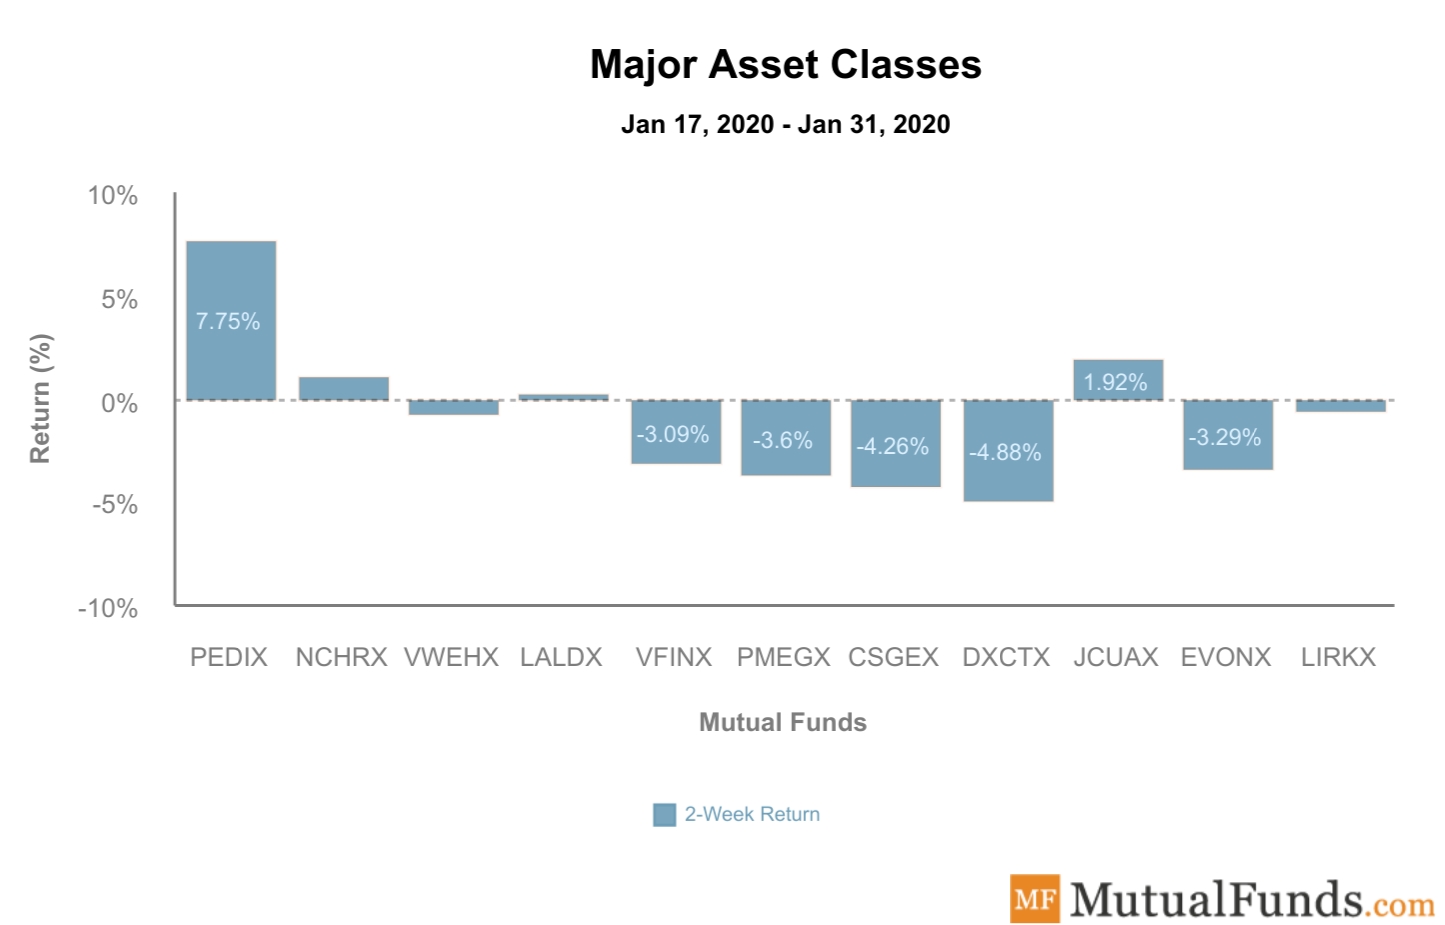 Major Asset Classes Performance February 4, 2020